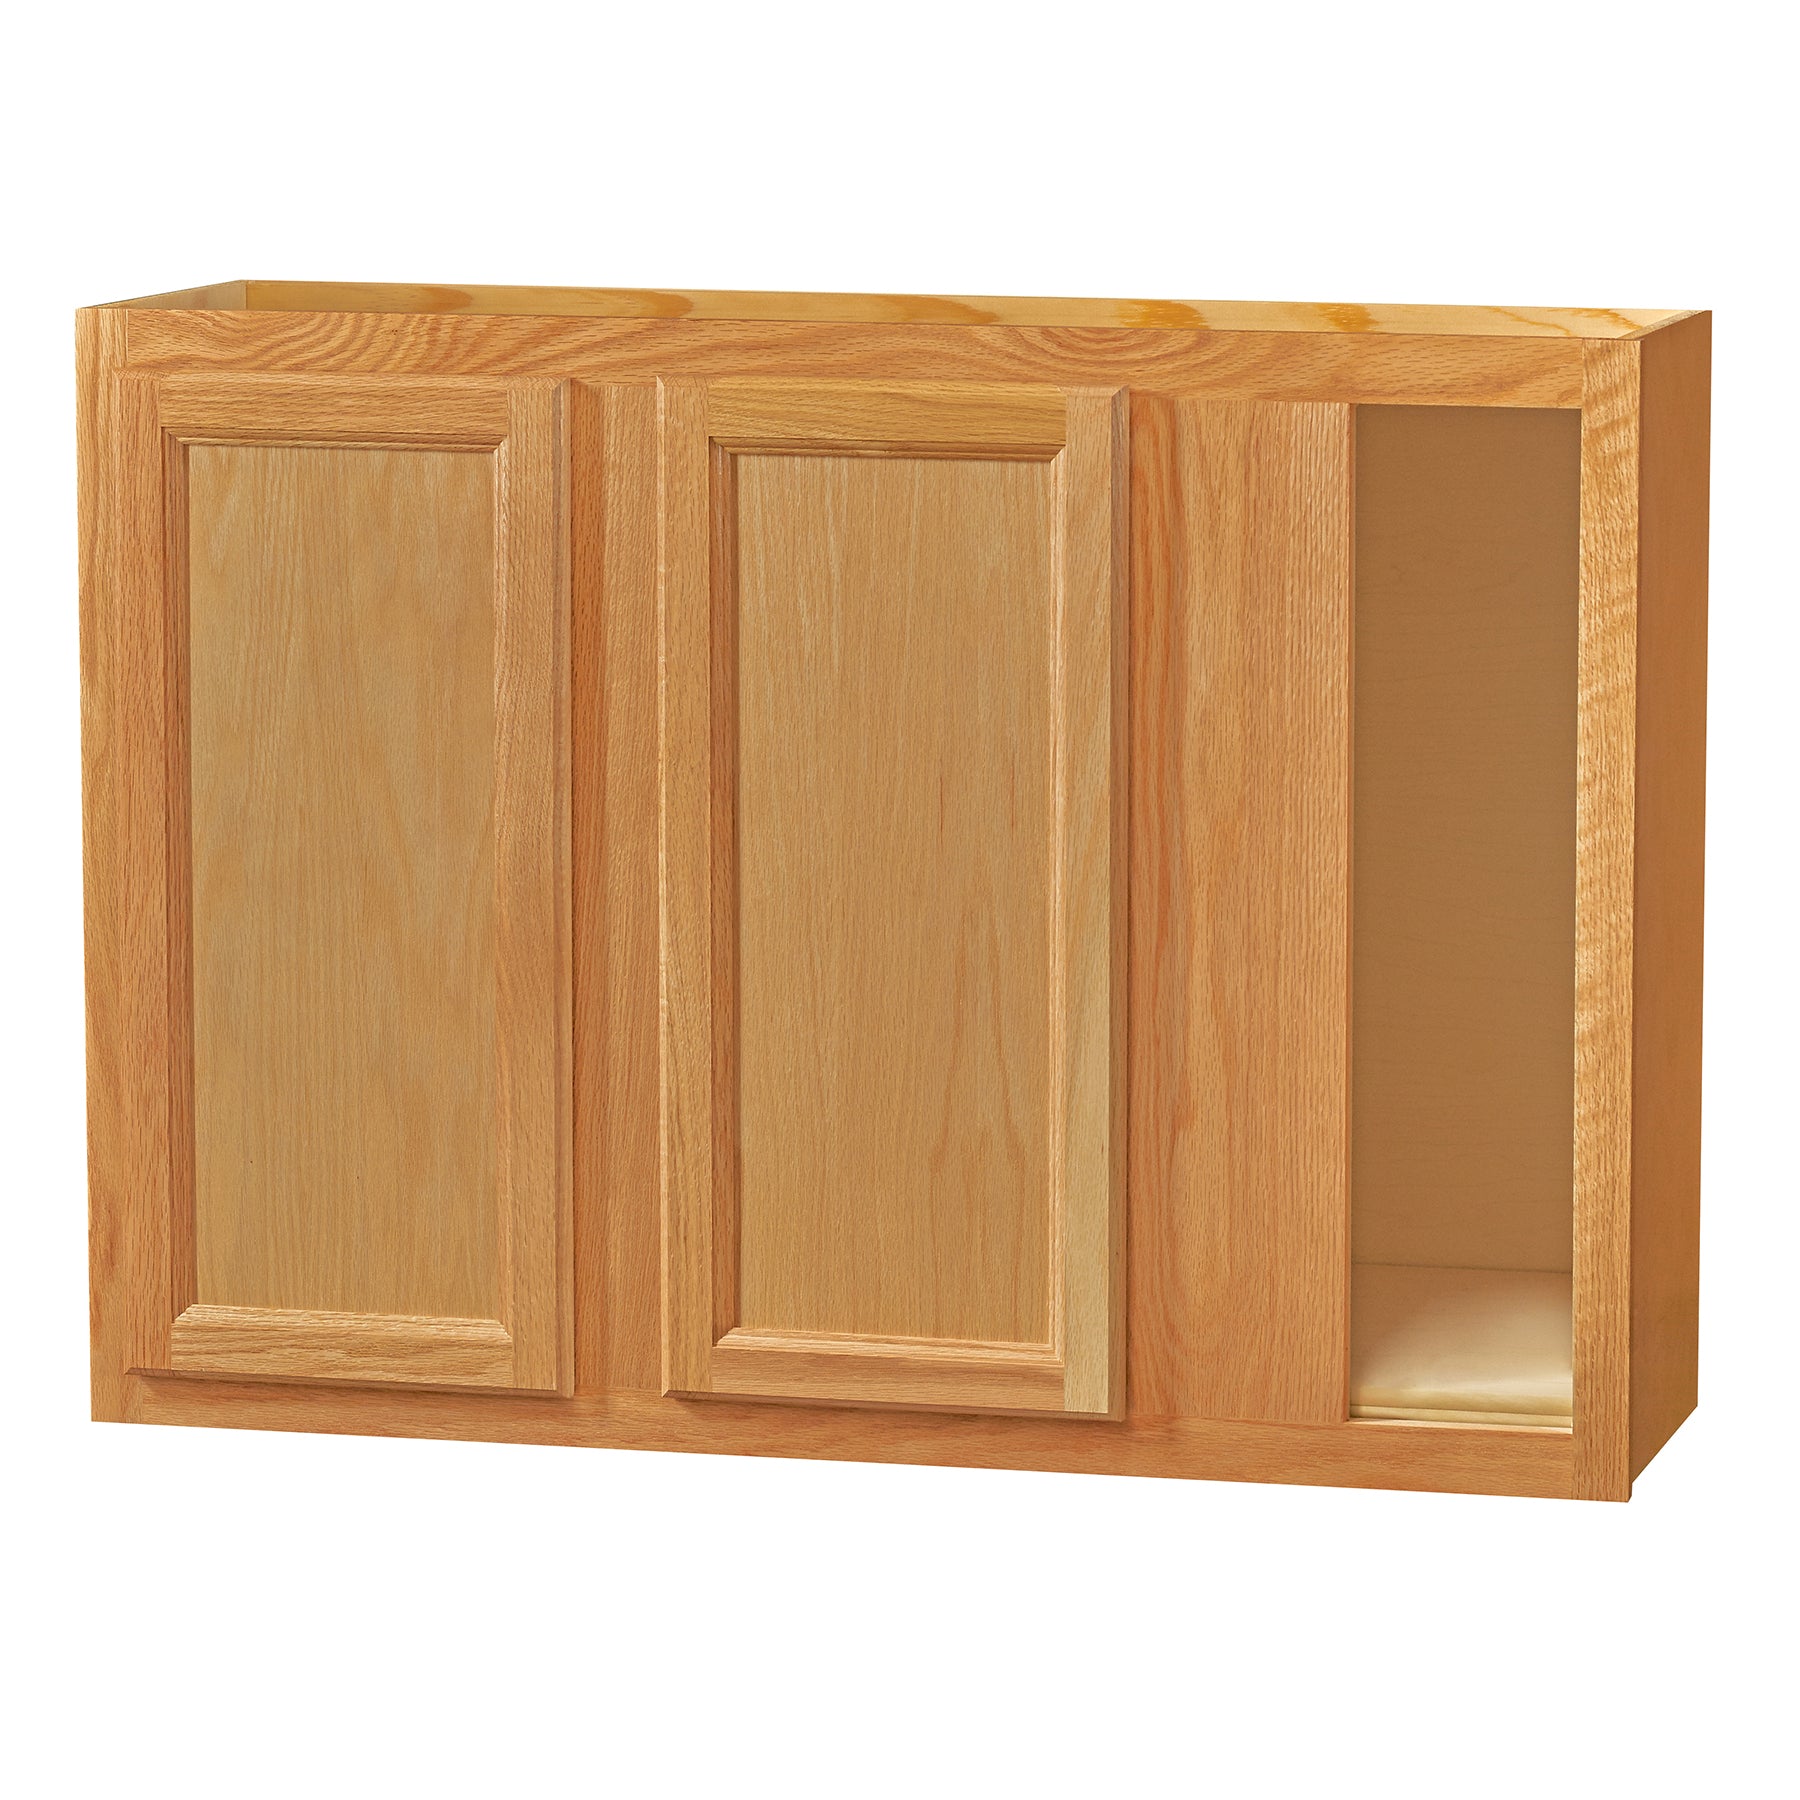 30 inch Wall Corner Cabinet - Chadwood Shaker - 42 Inch W x 30 Inch H x 12 Inch D